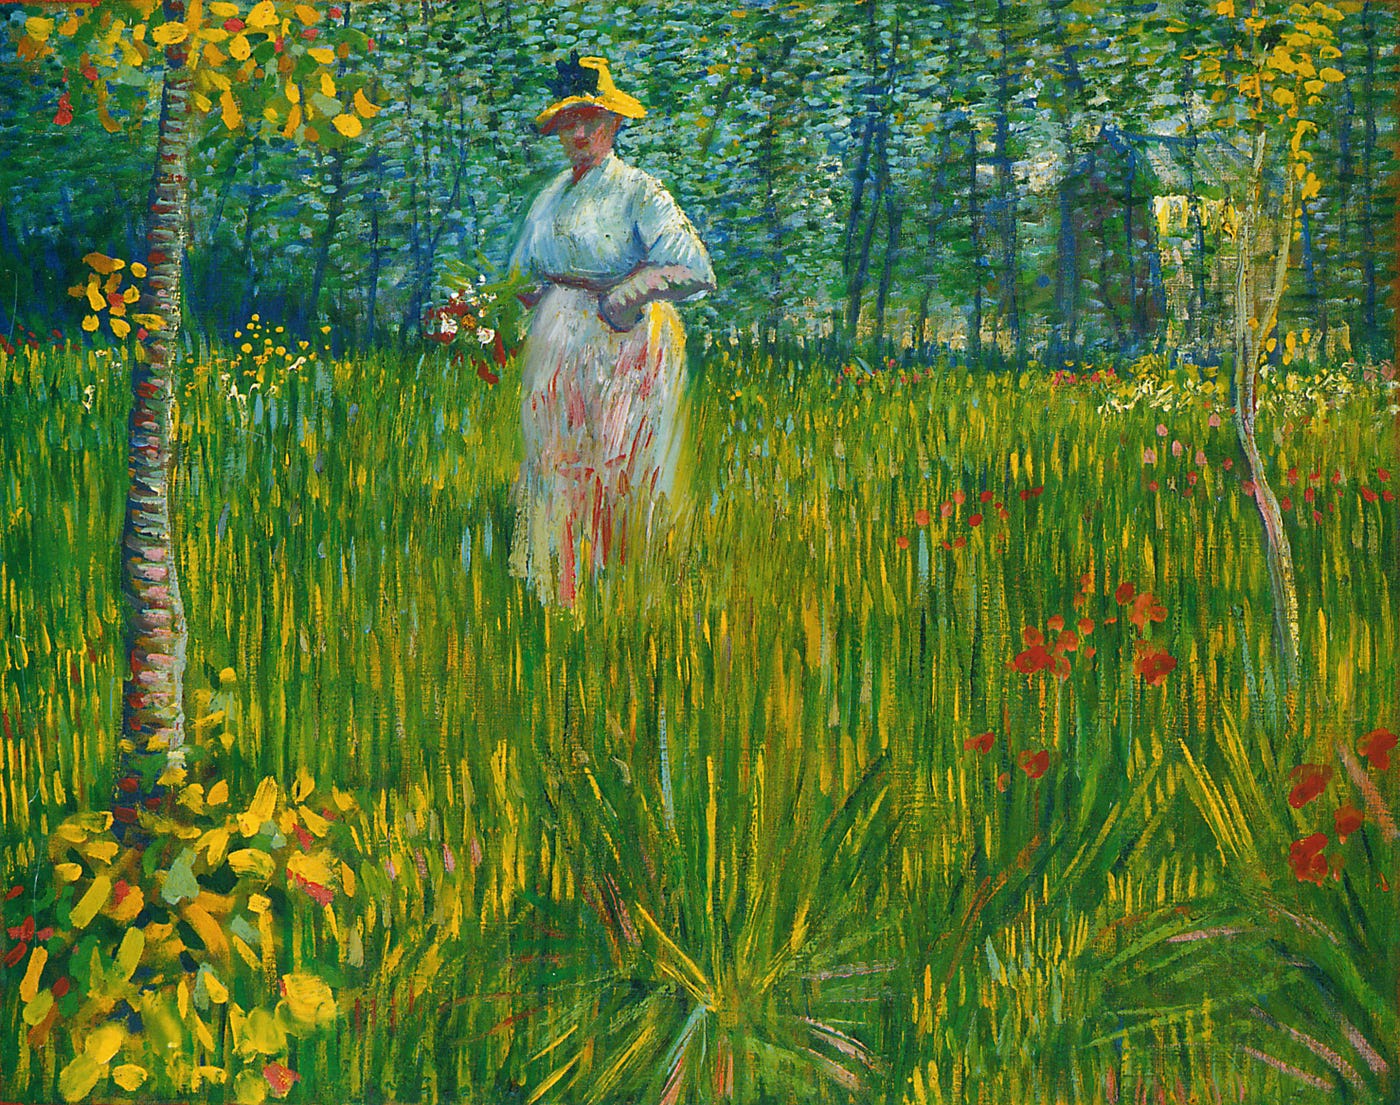 The unique relationship between van Gogh and Gauguin | by Susan L Stewart |  Medium